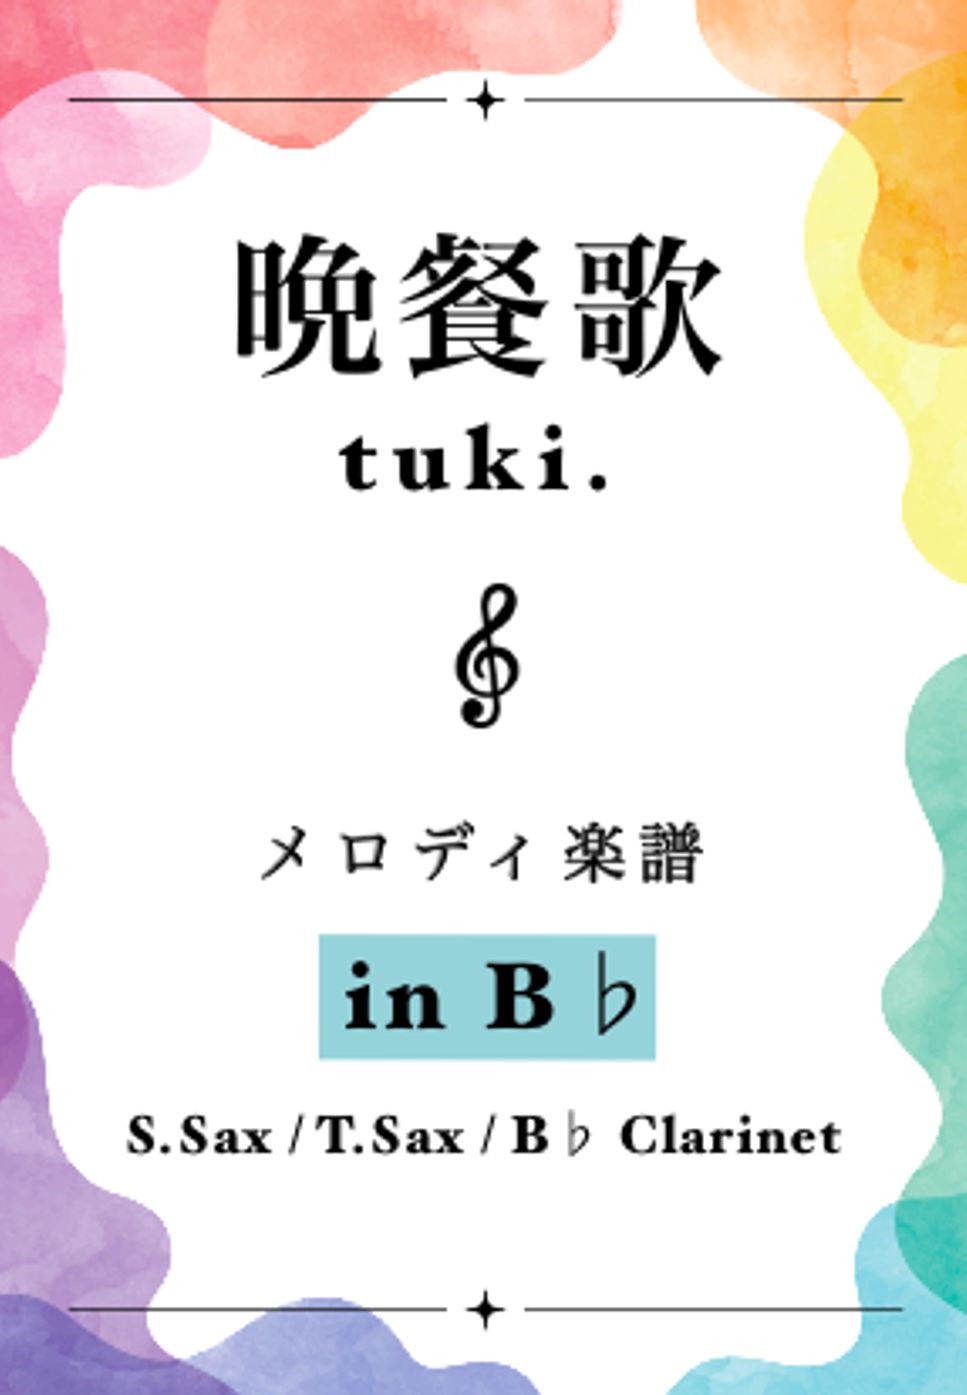 tuki. - 晩餐歌 (In Bb) by Sumika - Sumichannel